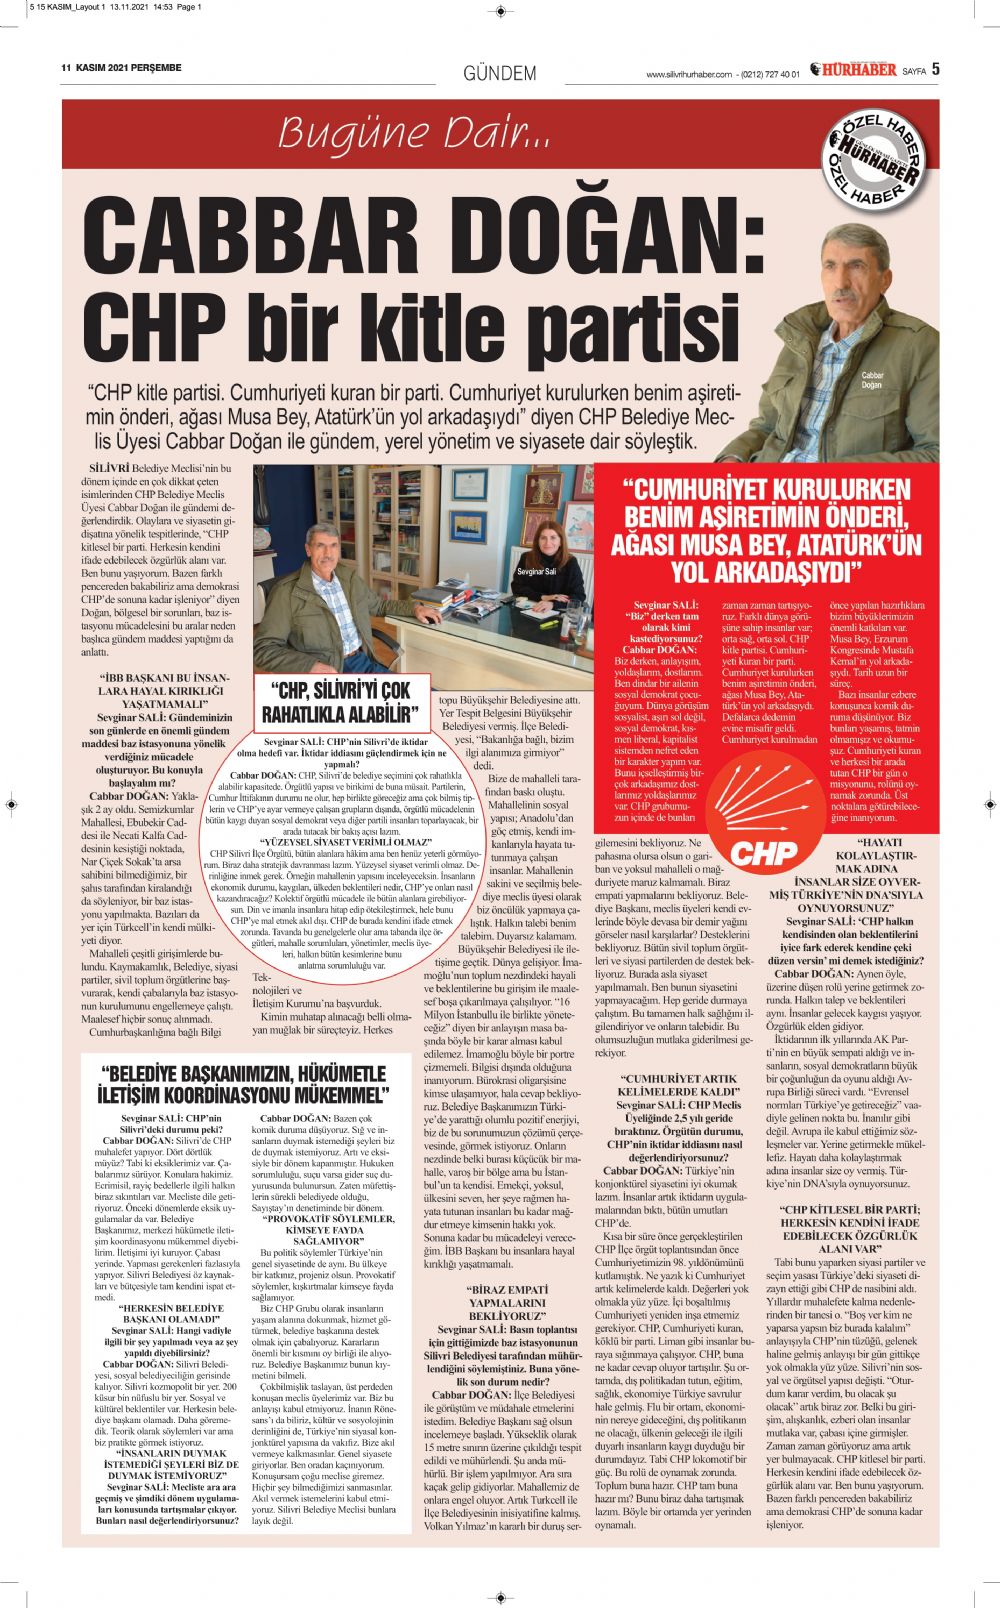 Cabbar Doğan: CHP bir kitle partisi